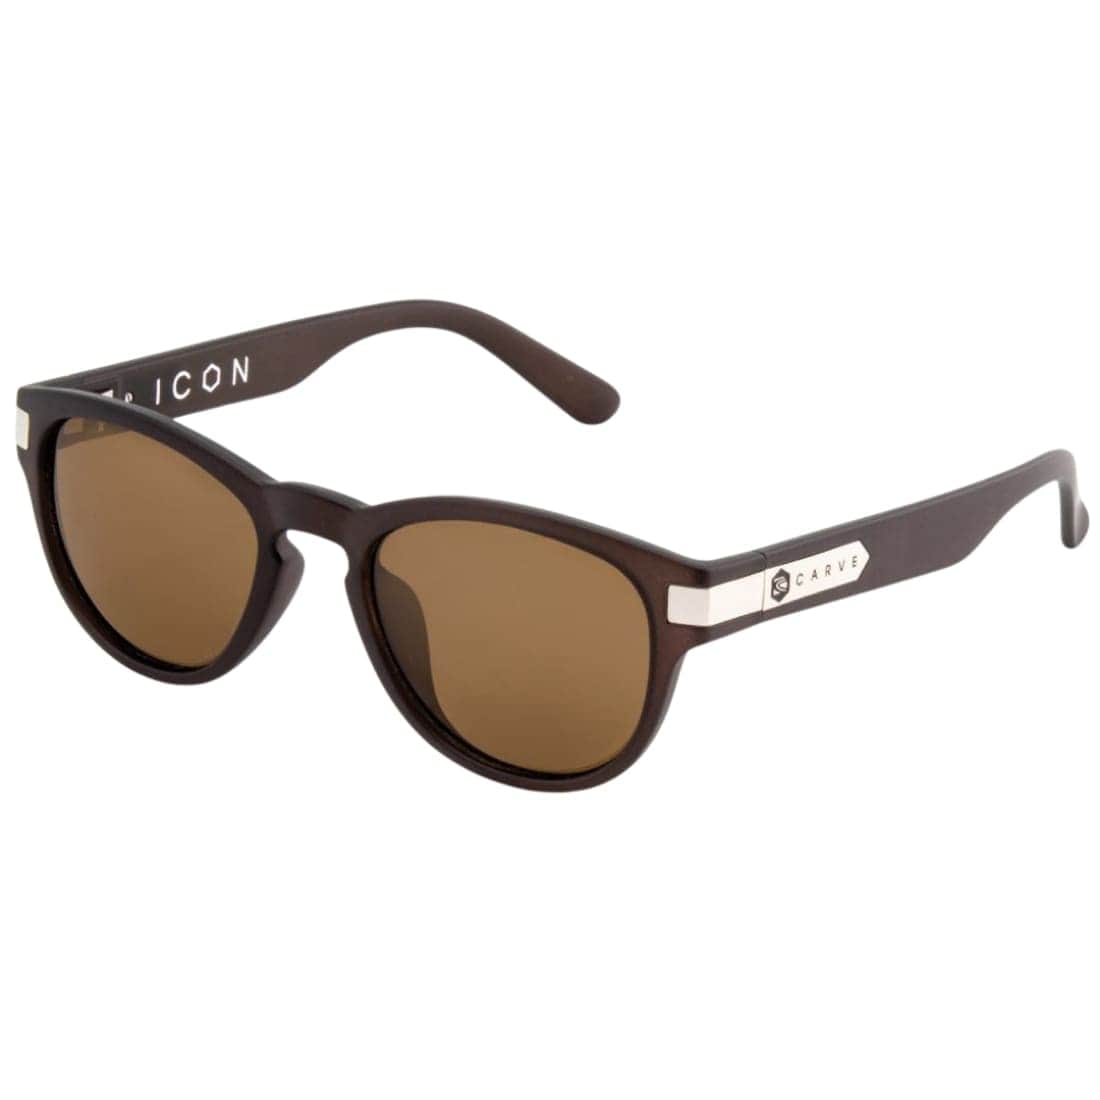 Carve Icon Polarized Sunglasses - Brown Translucent